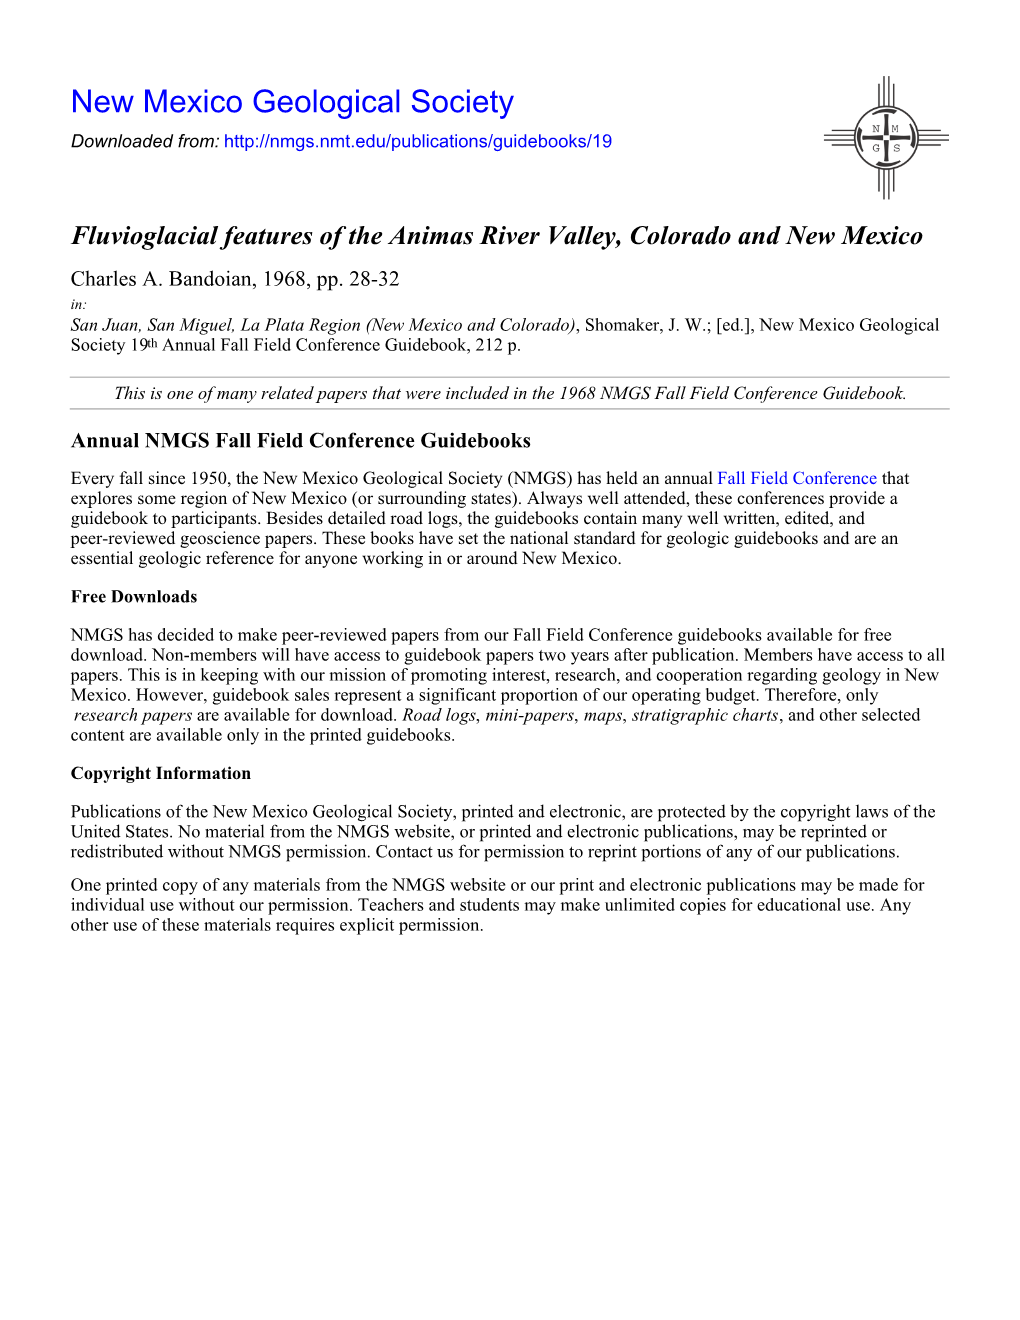 Fluvioglacial Features of the Animas River Valley, Colorado and New Mexico Charles A